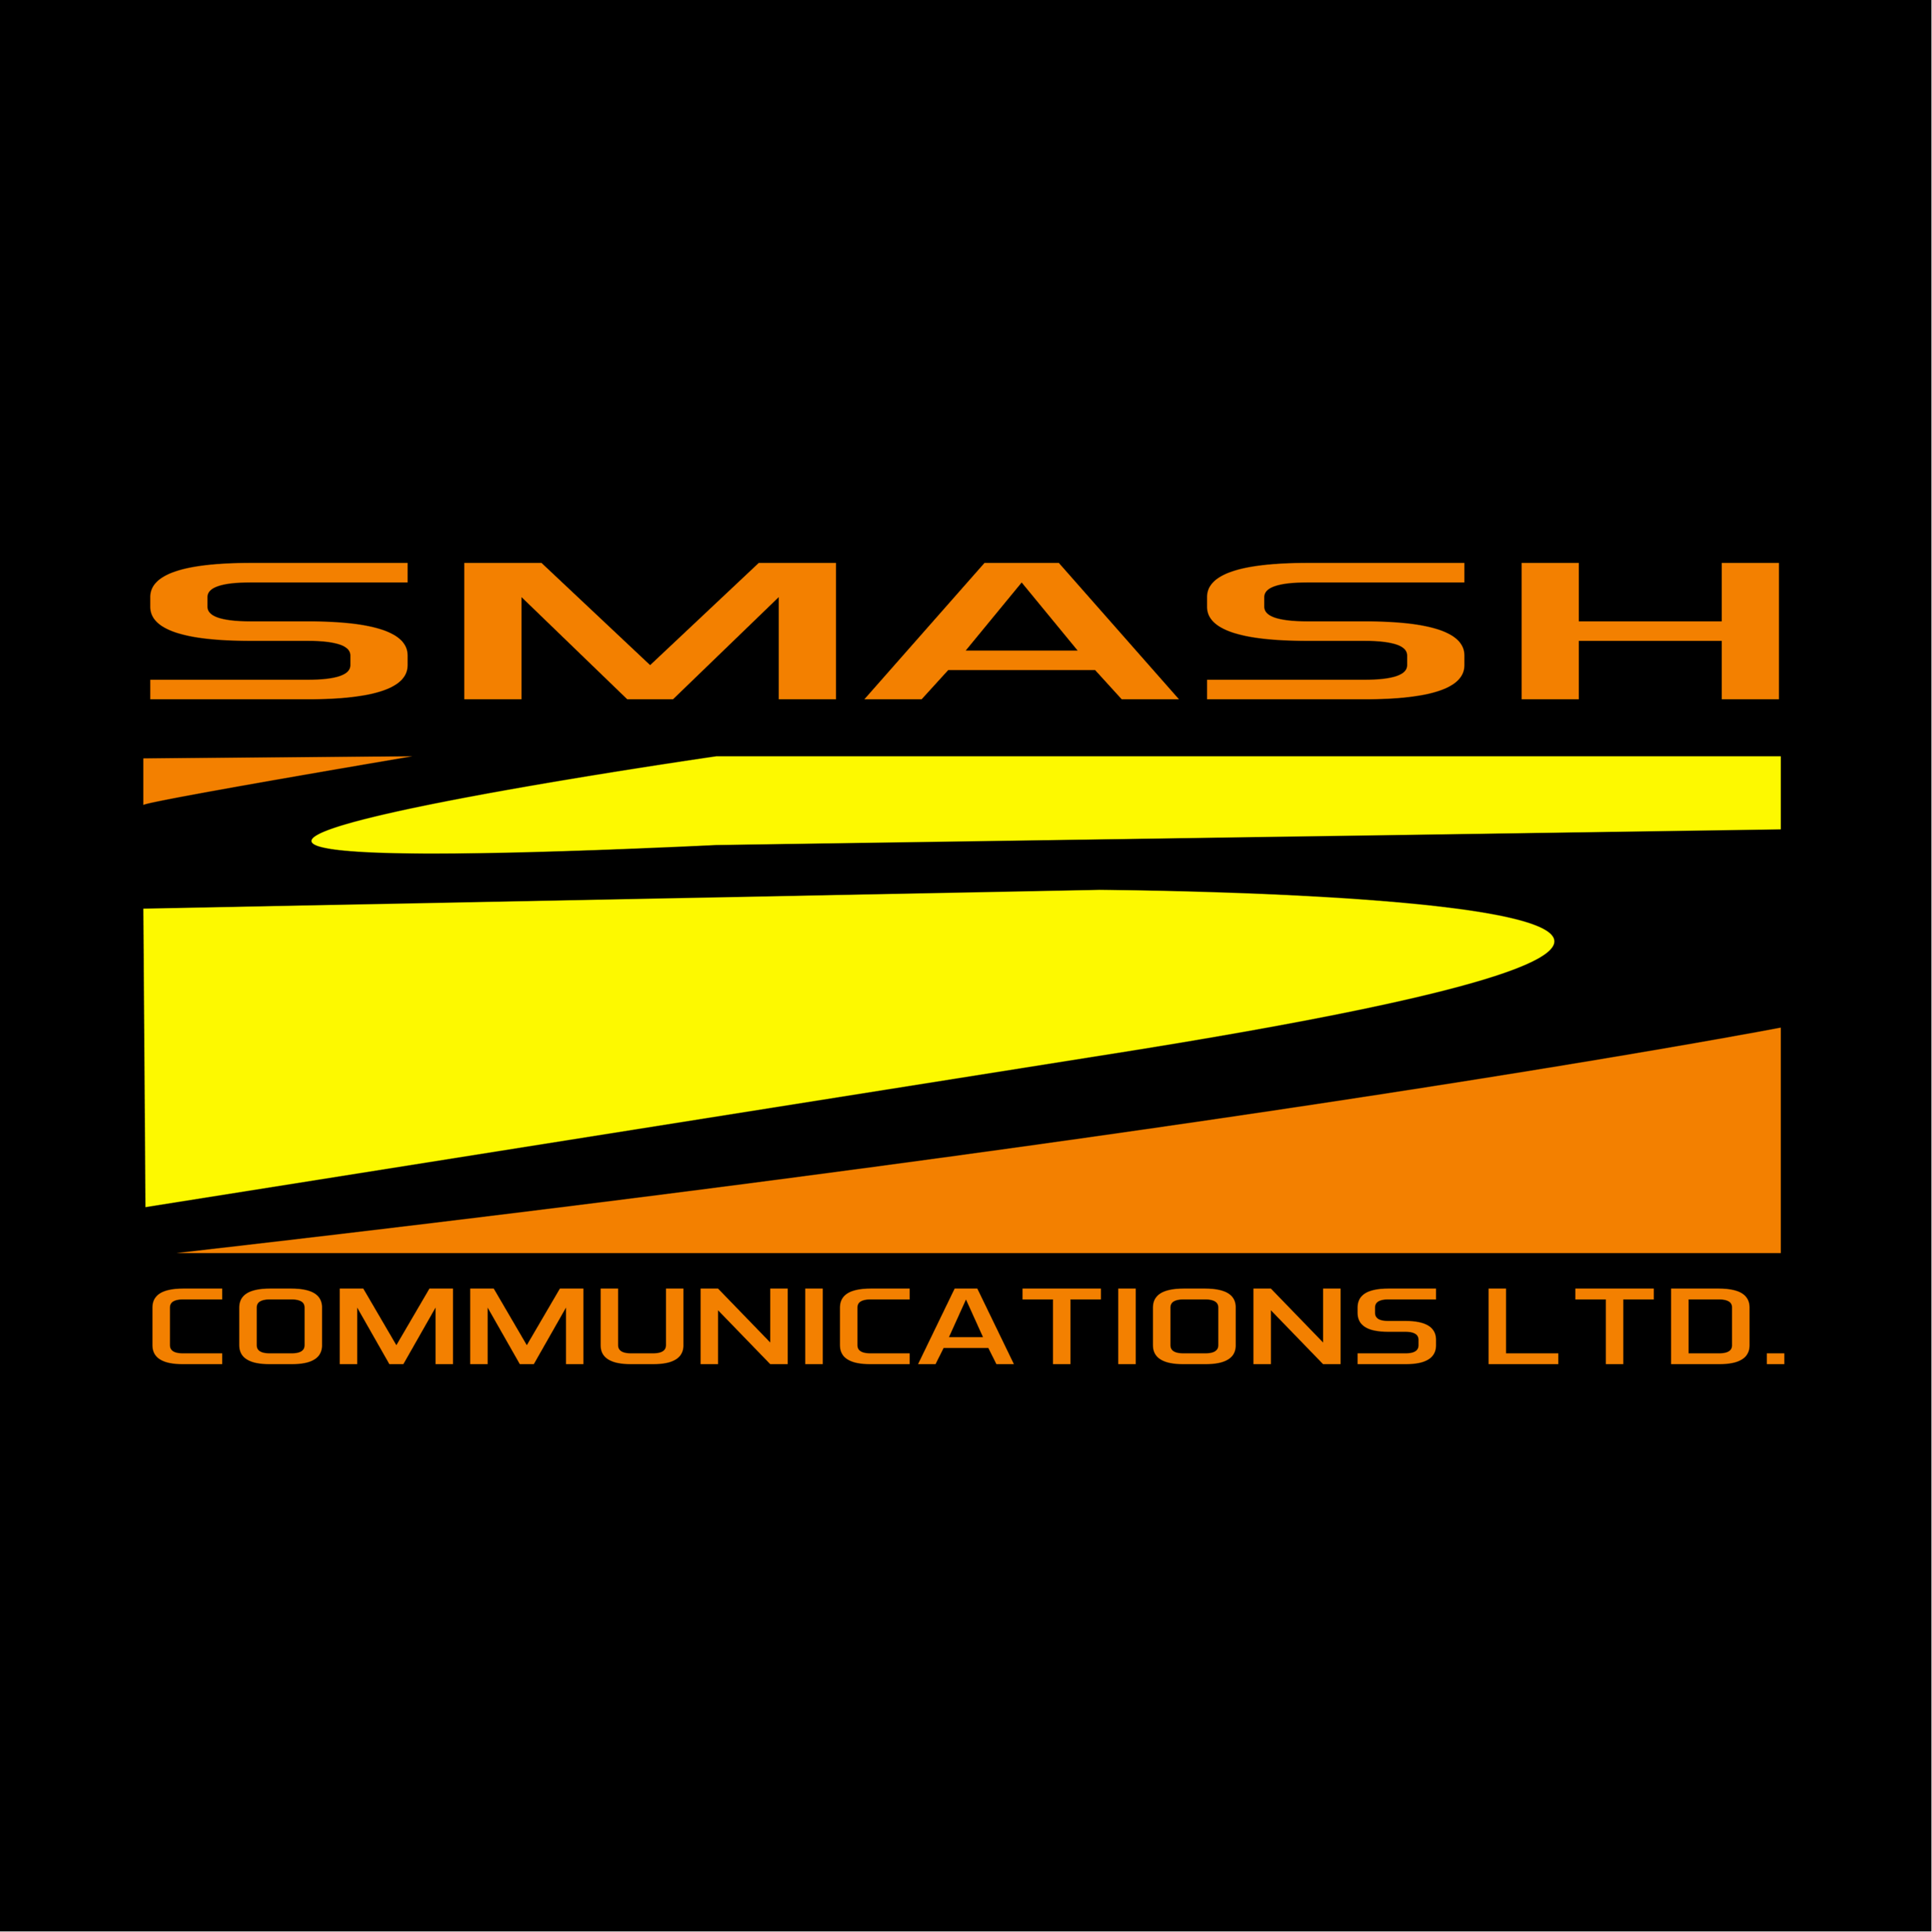 Smash Radio 104.6FM